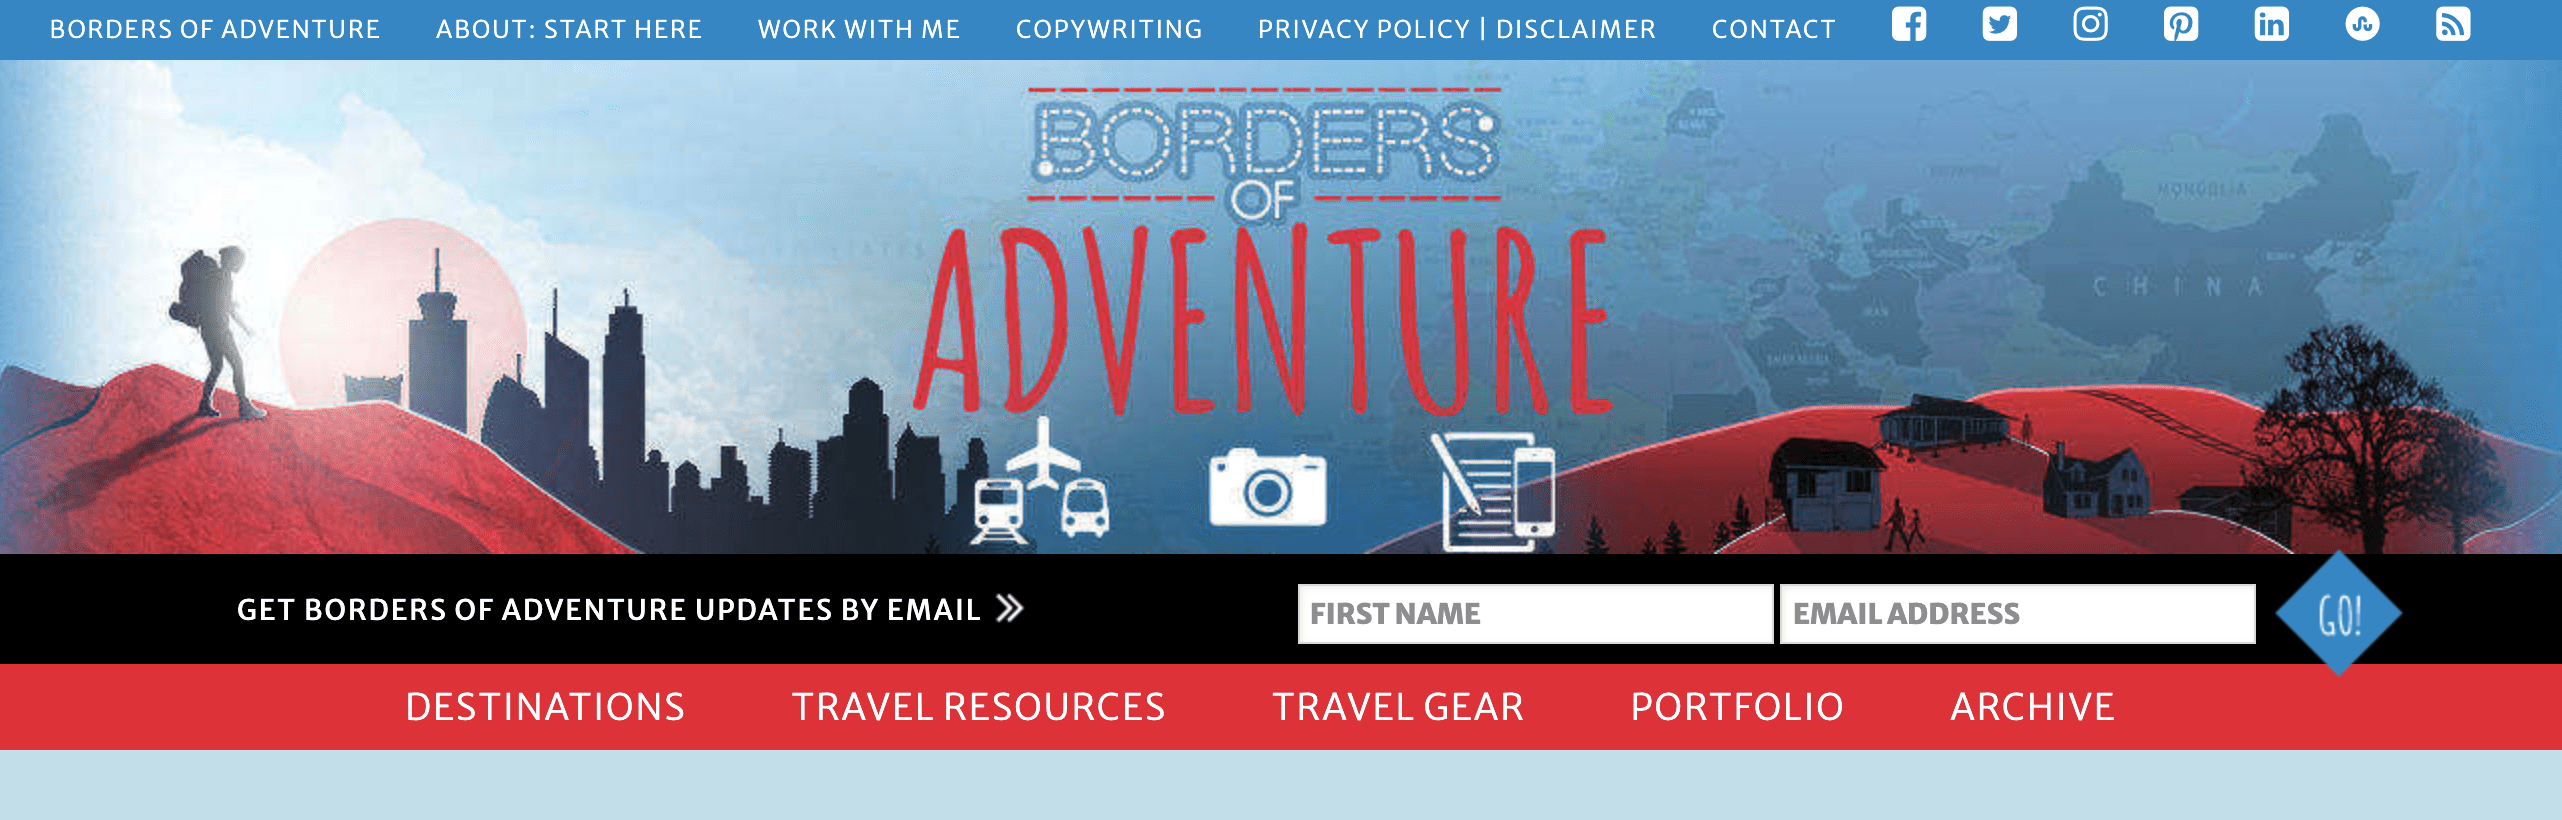 Borders of Adventure - responsible travel blogger